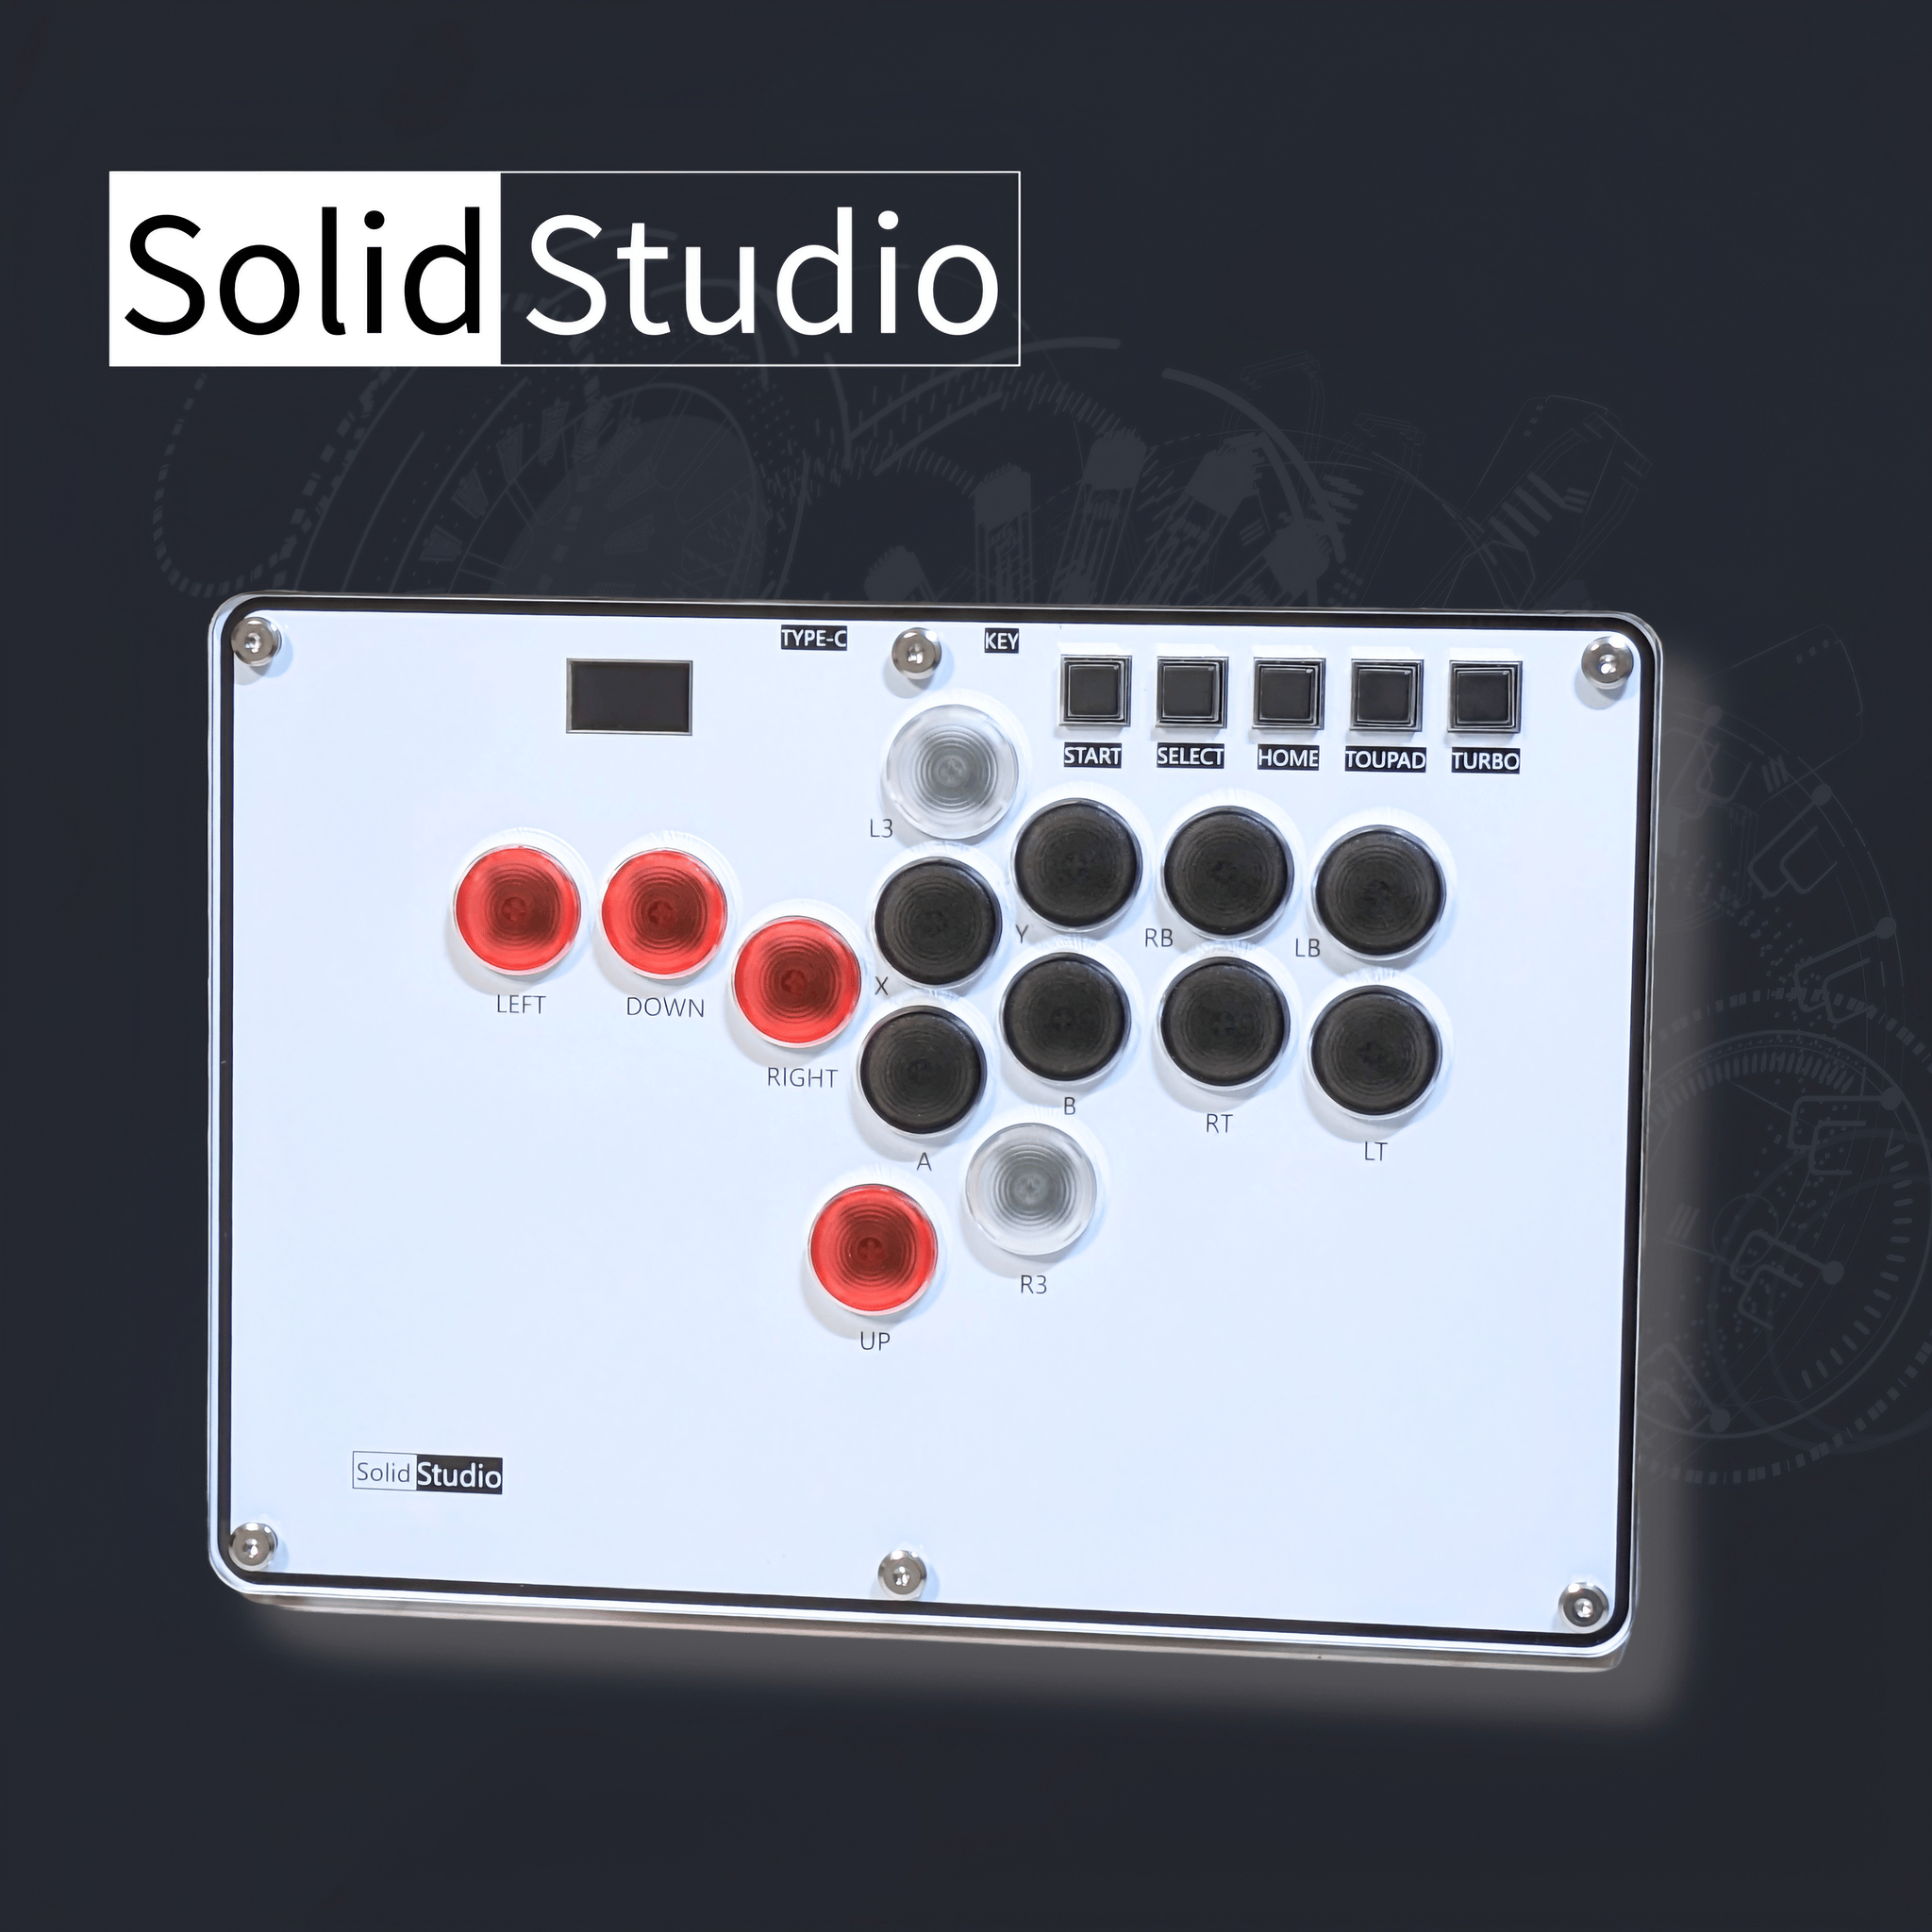 CIELOGAMES】Solid Studio A14 | 薄型レバーレスコントローラー